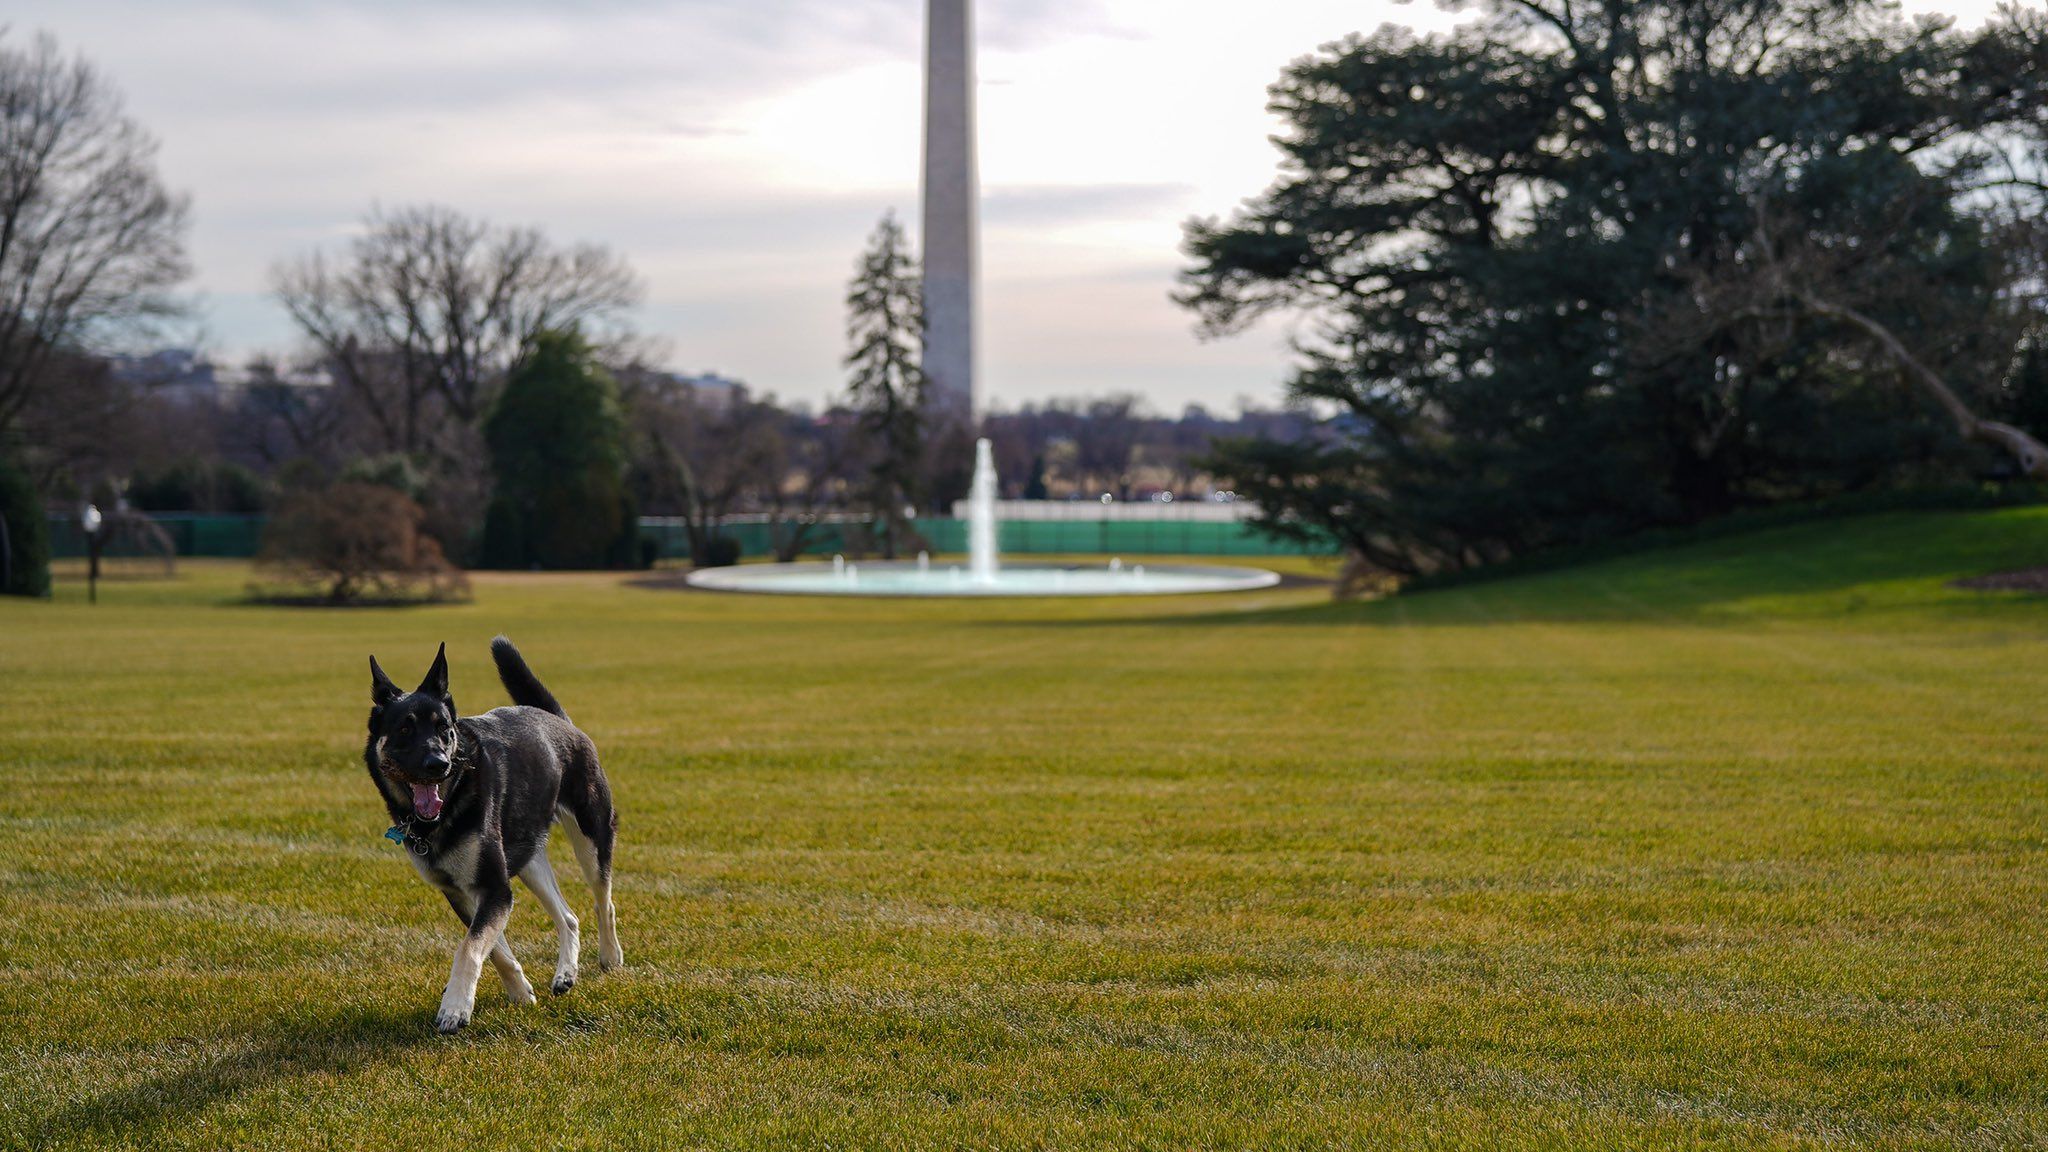 Joe Biden's rescue dog Major on the White House Lawn